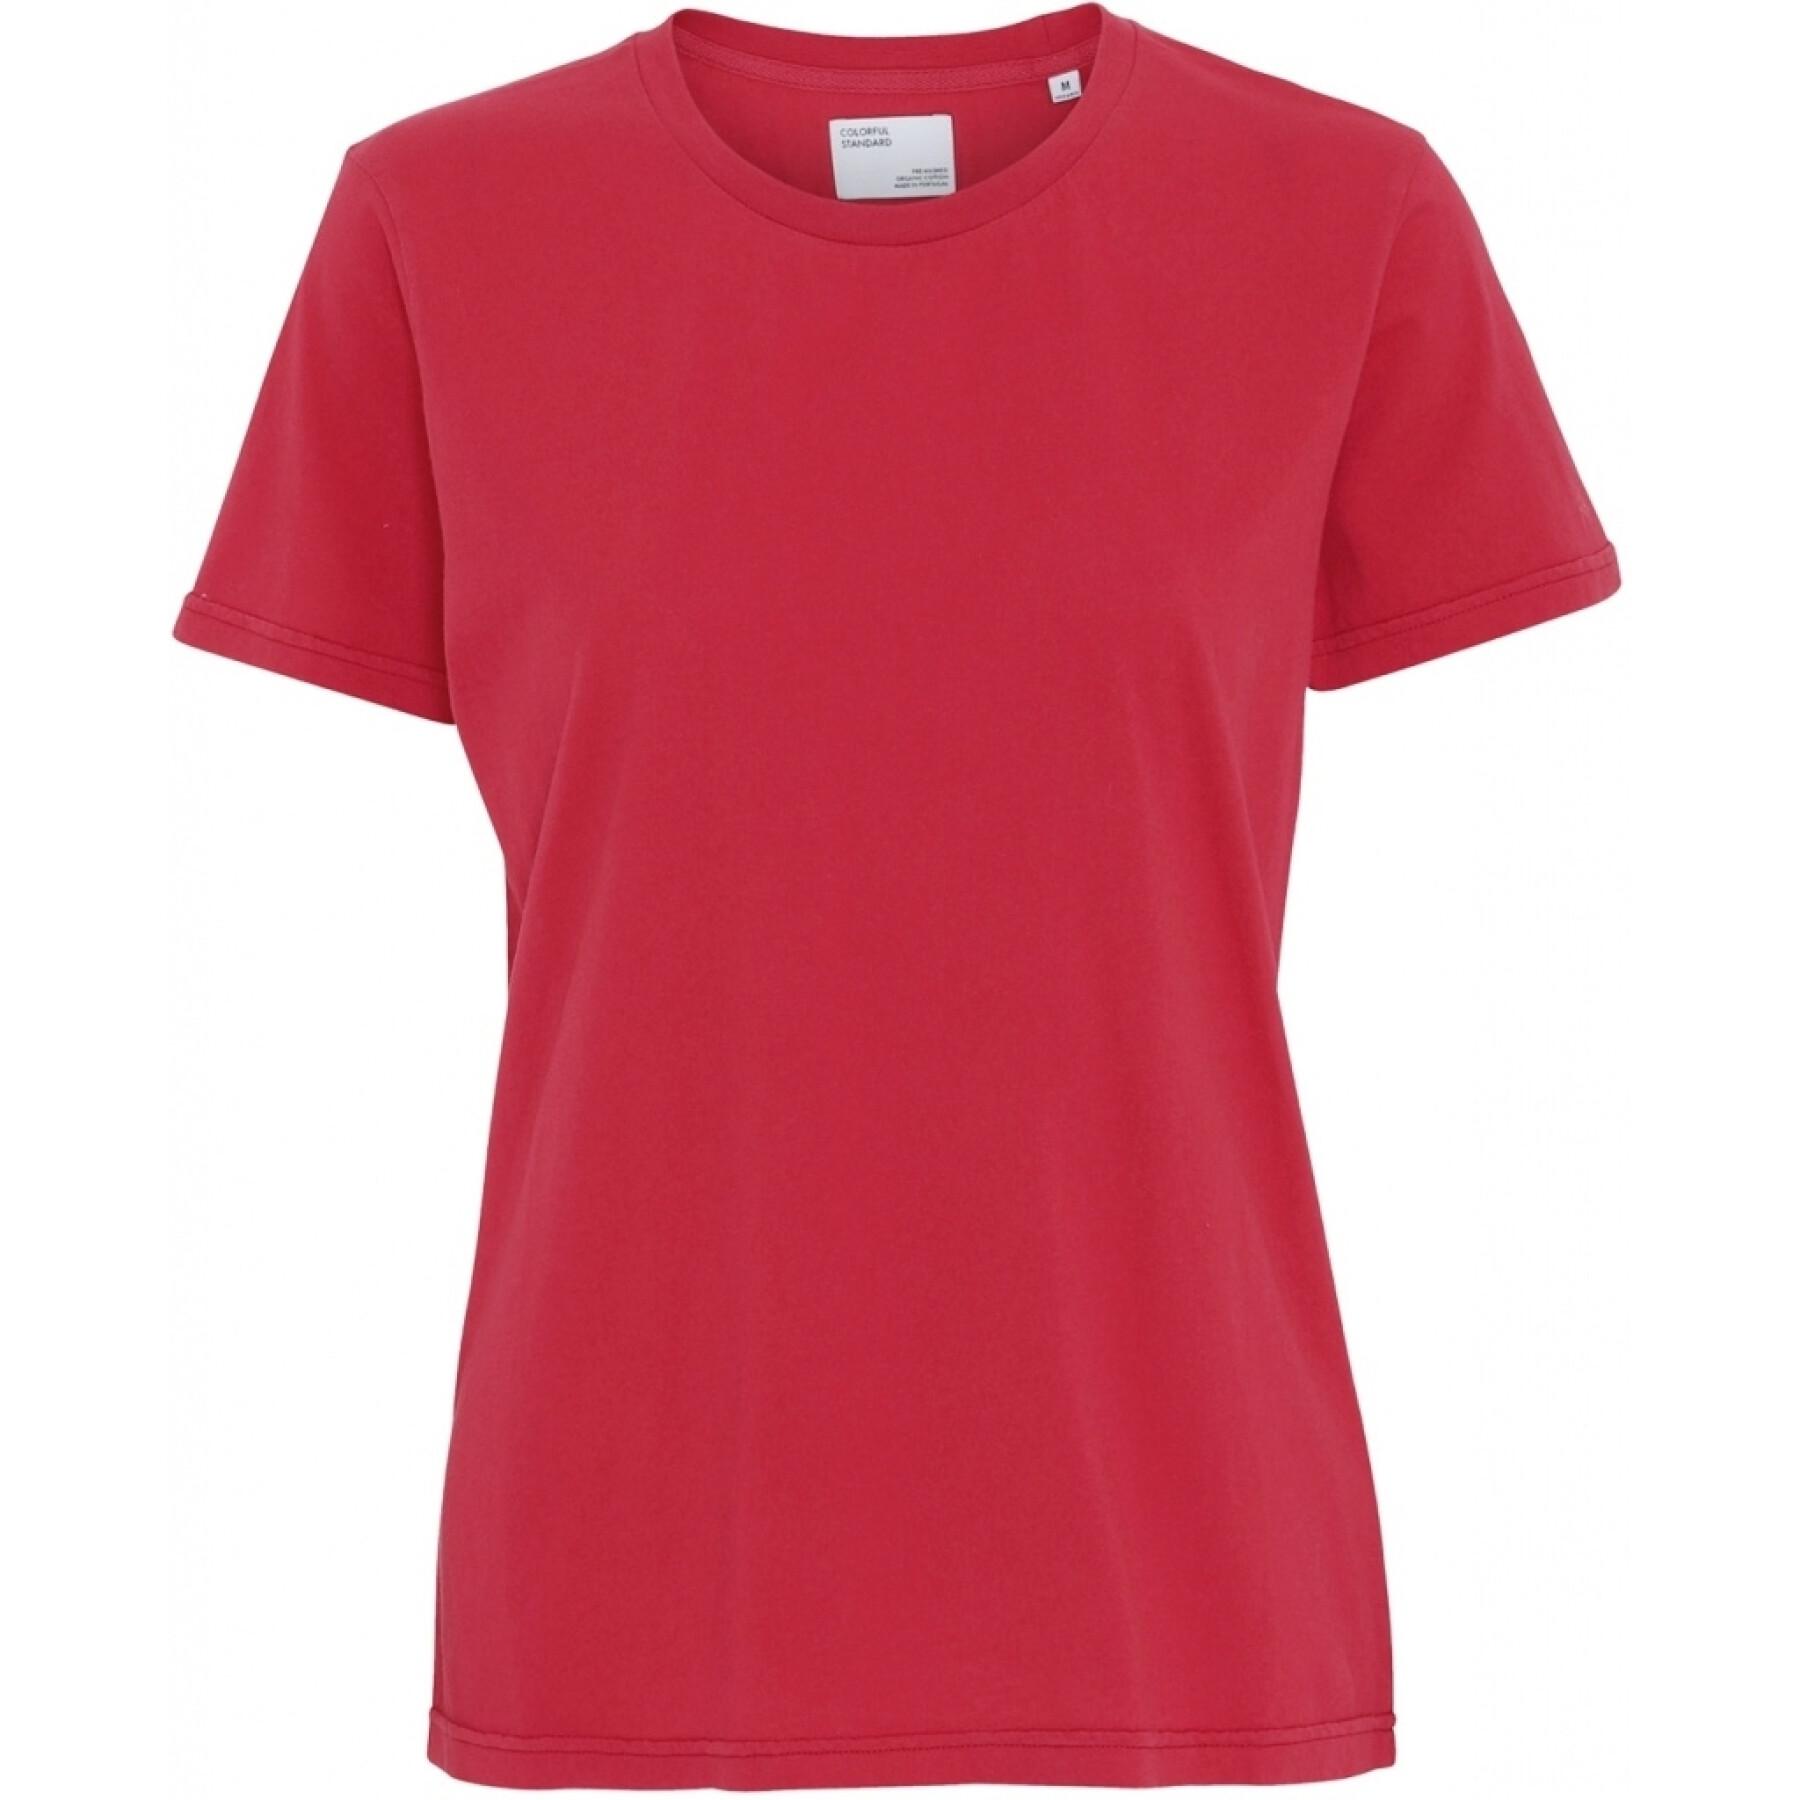 Women's T-shirt Colorful Standard Light Organic scarlet red